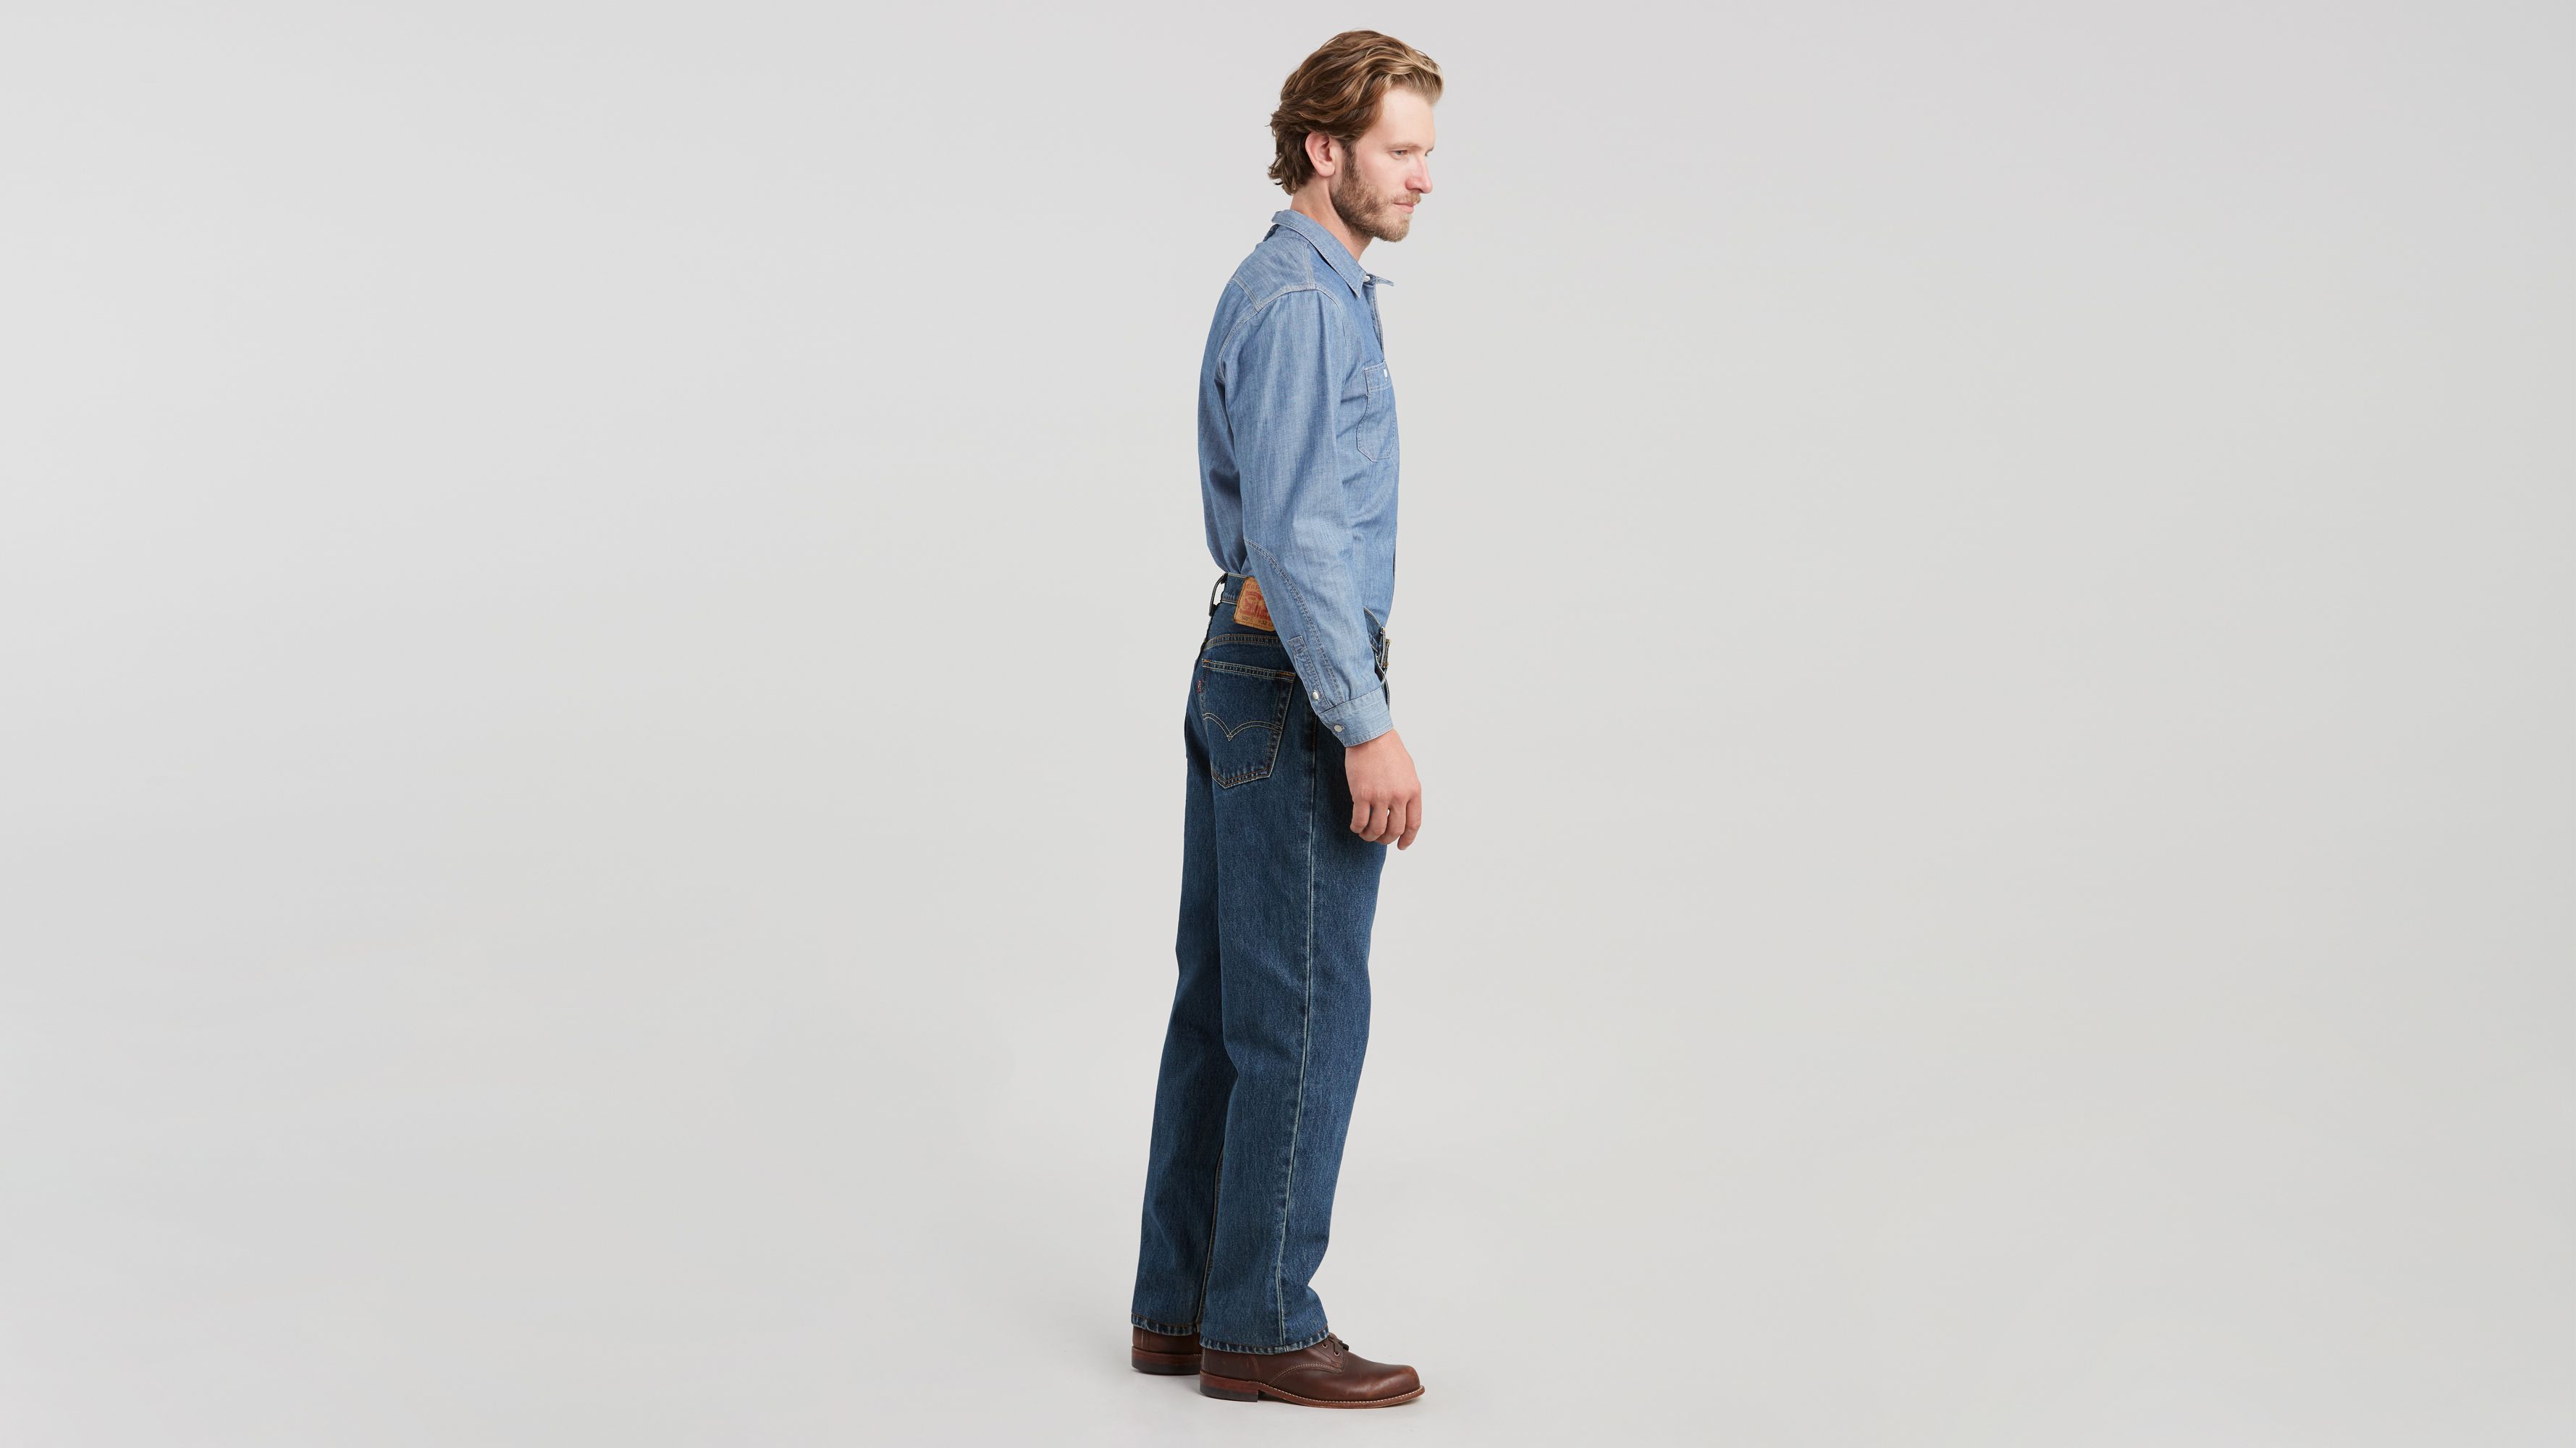 560™ Comfort Fit Men's Jeans - Dark Wash | Levi's® US